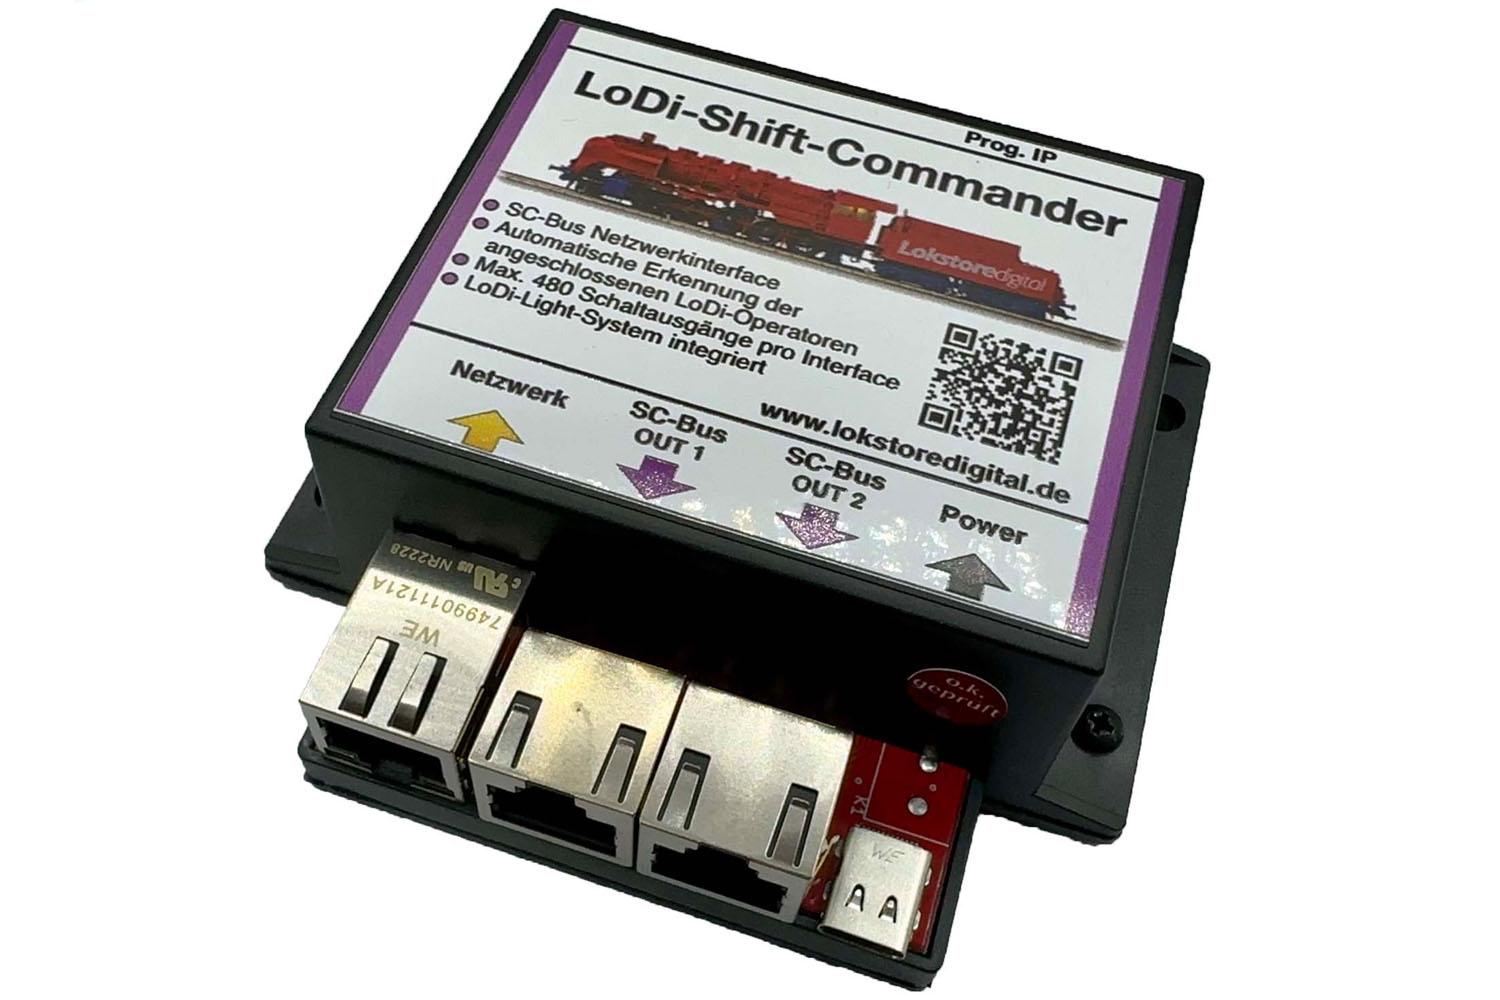 001 LoDi-Shift Commander